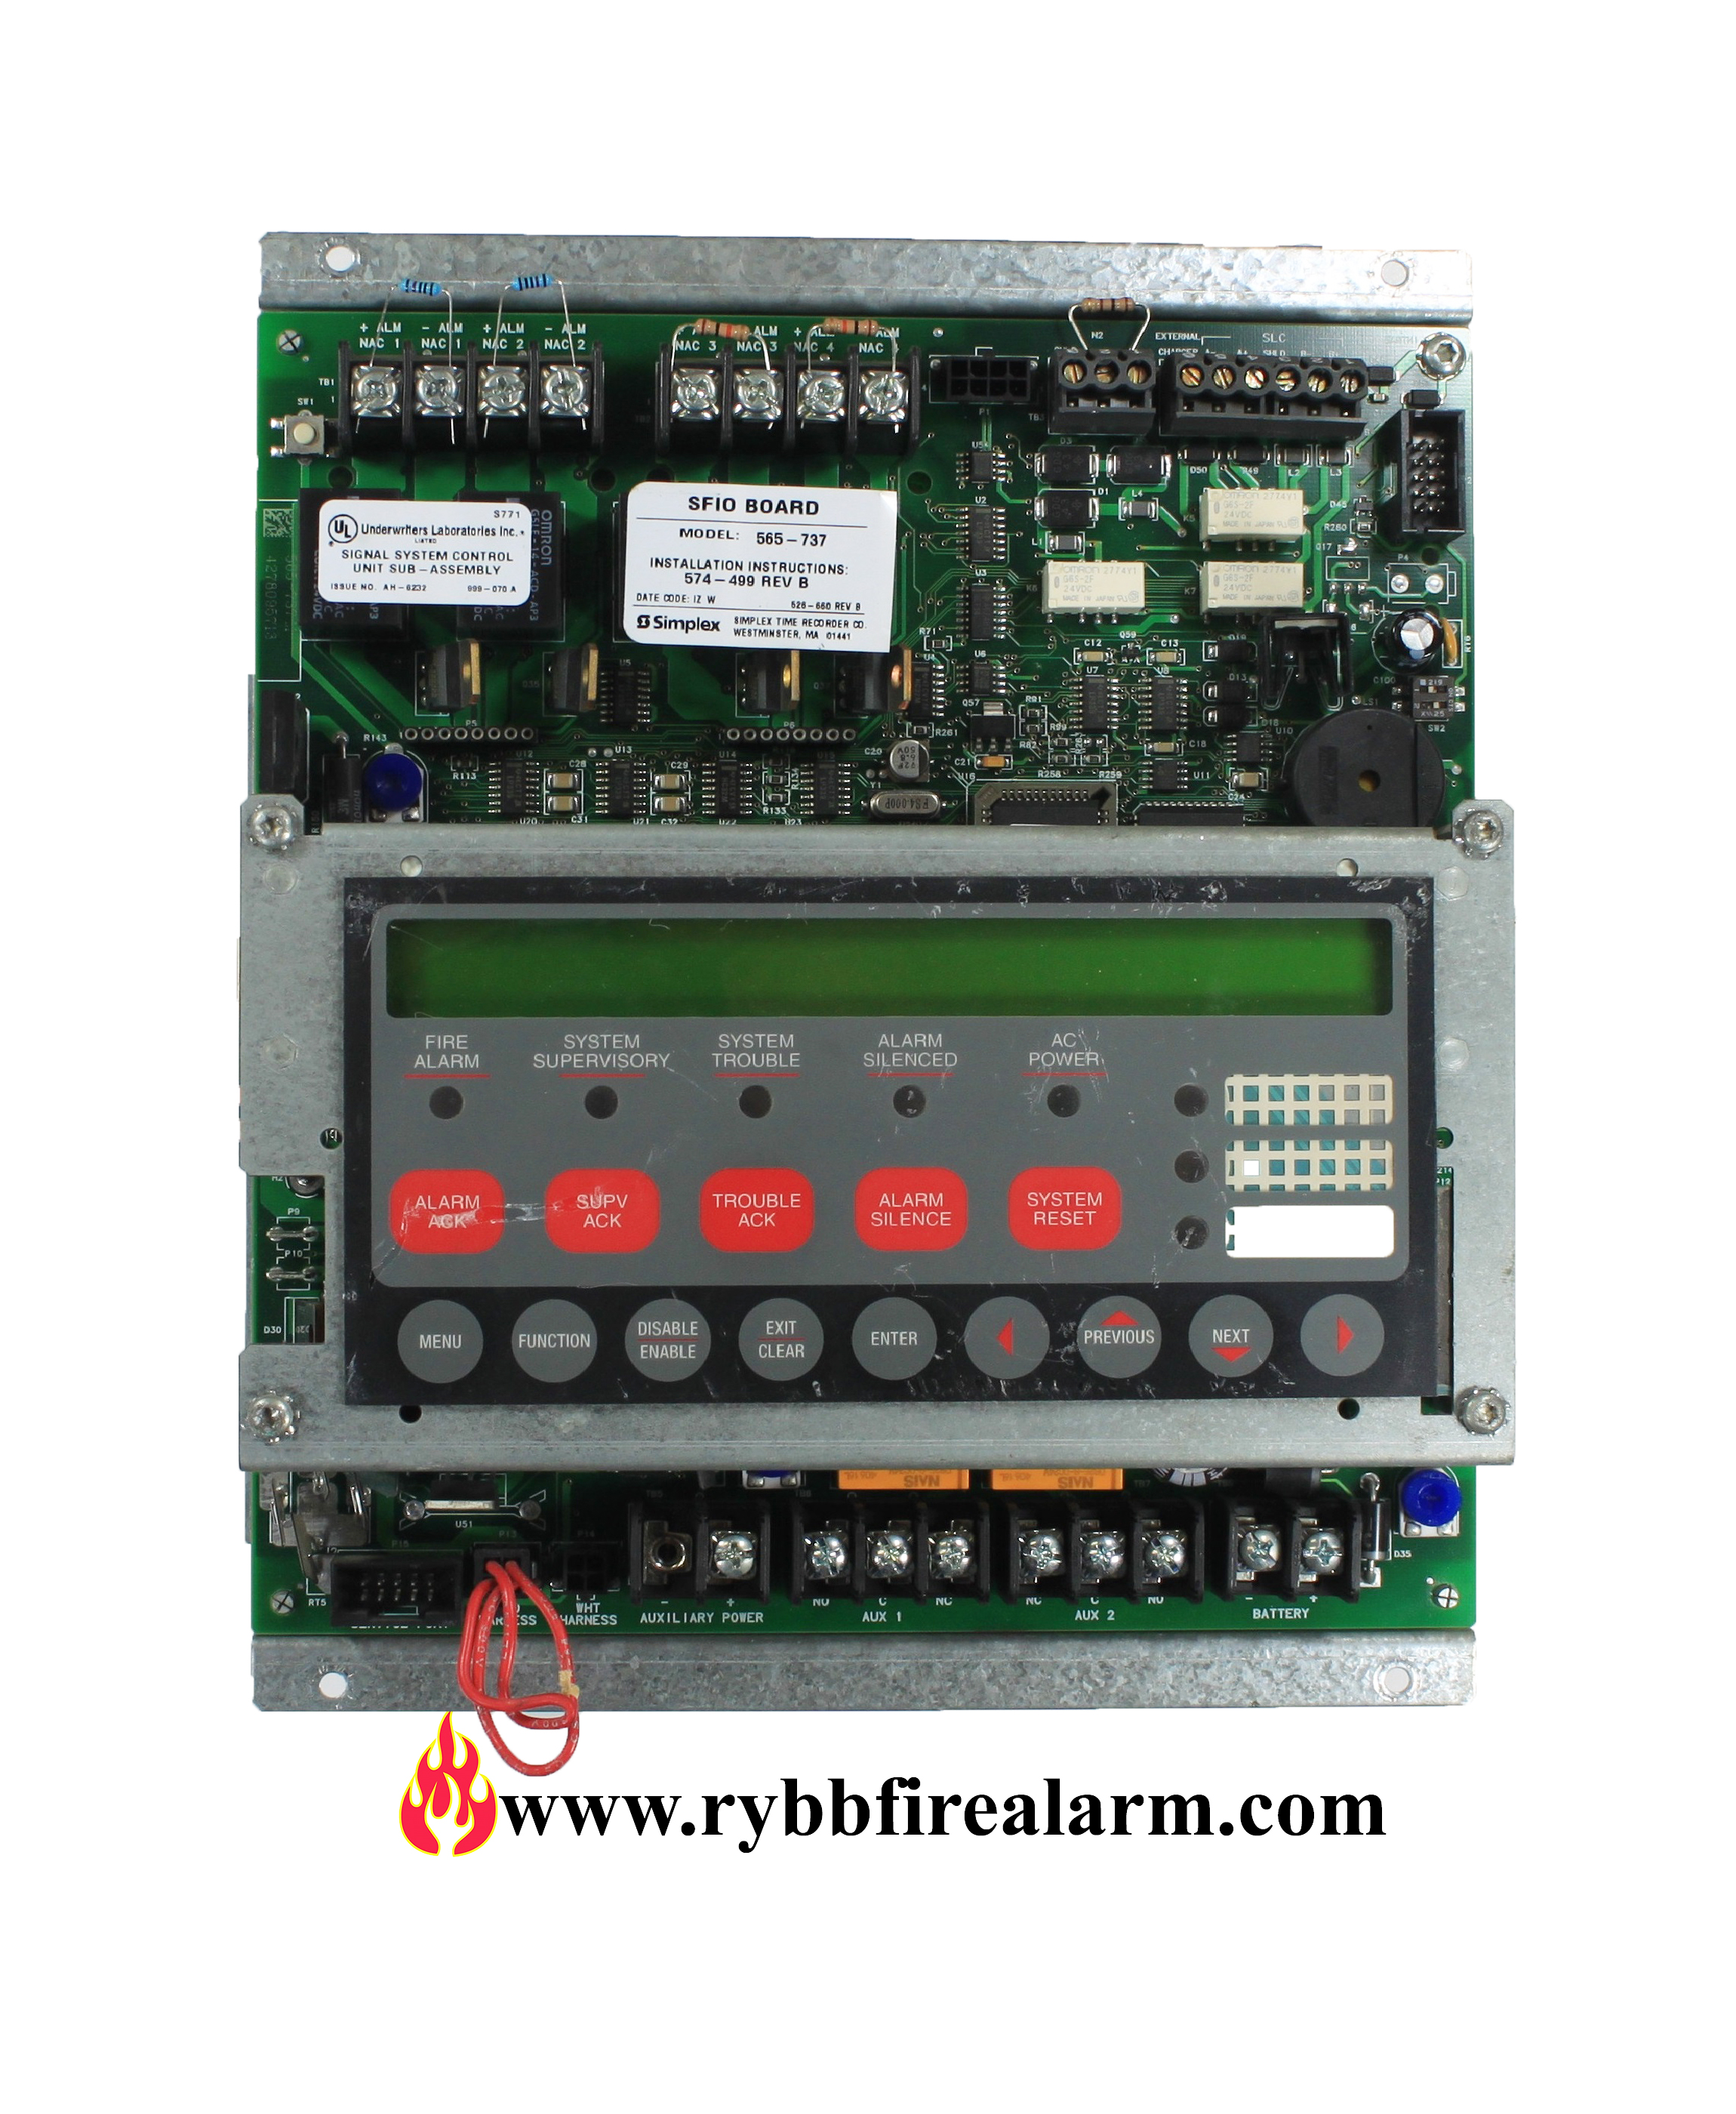 Simplex 4010 Fire Alarm Control Panel